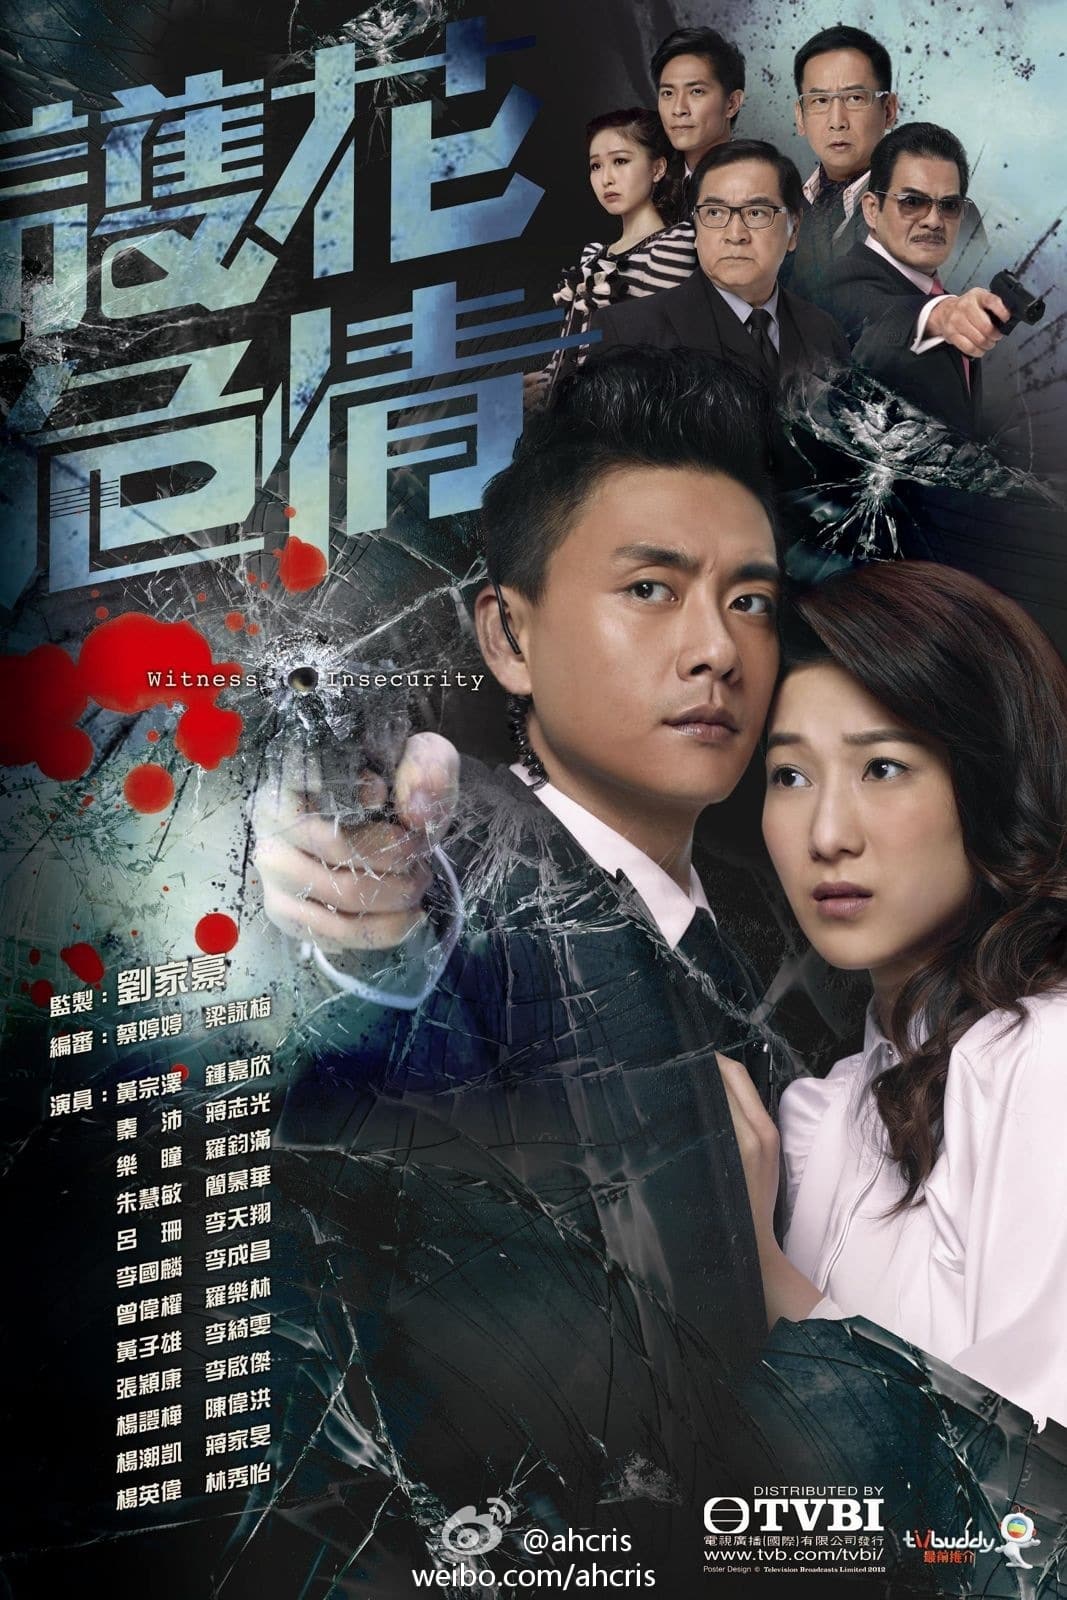 HK TV Drama, watch tvb drama online, Witness Insecurity